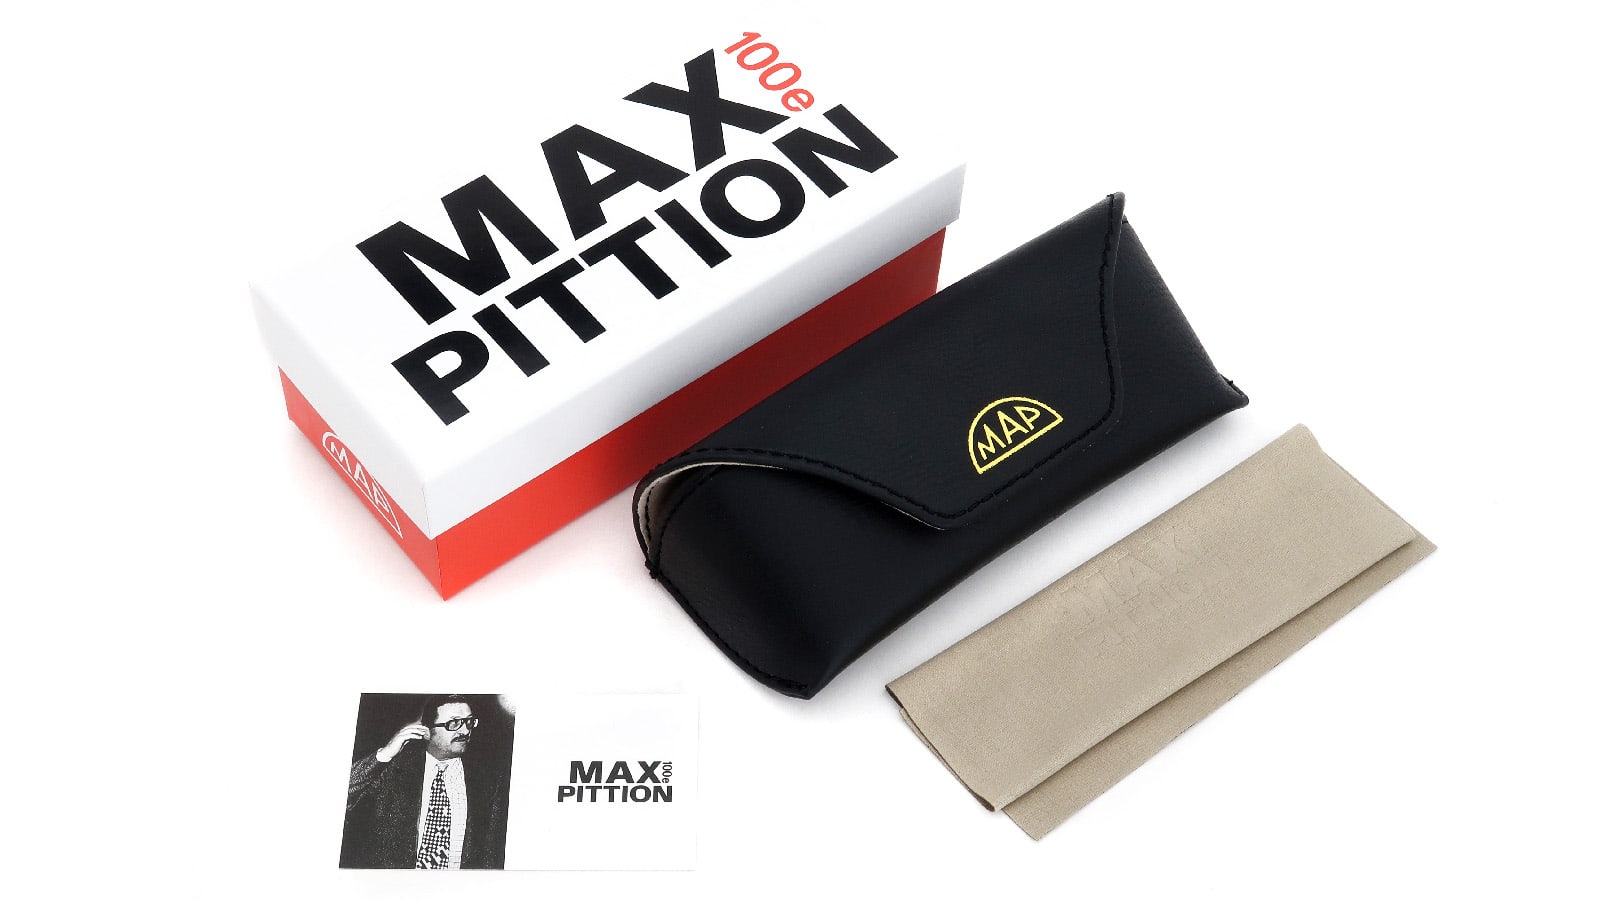 MAX PITTION CROWN PANTO 44 (MXPL-004B) RUBY ROUGE 15